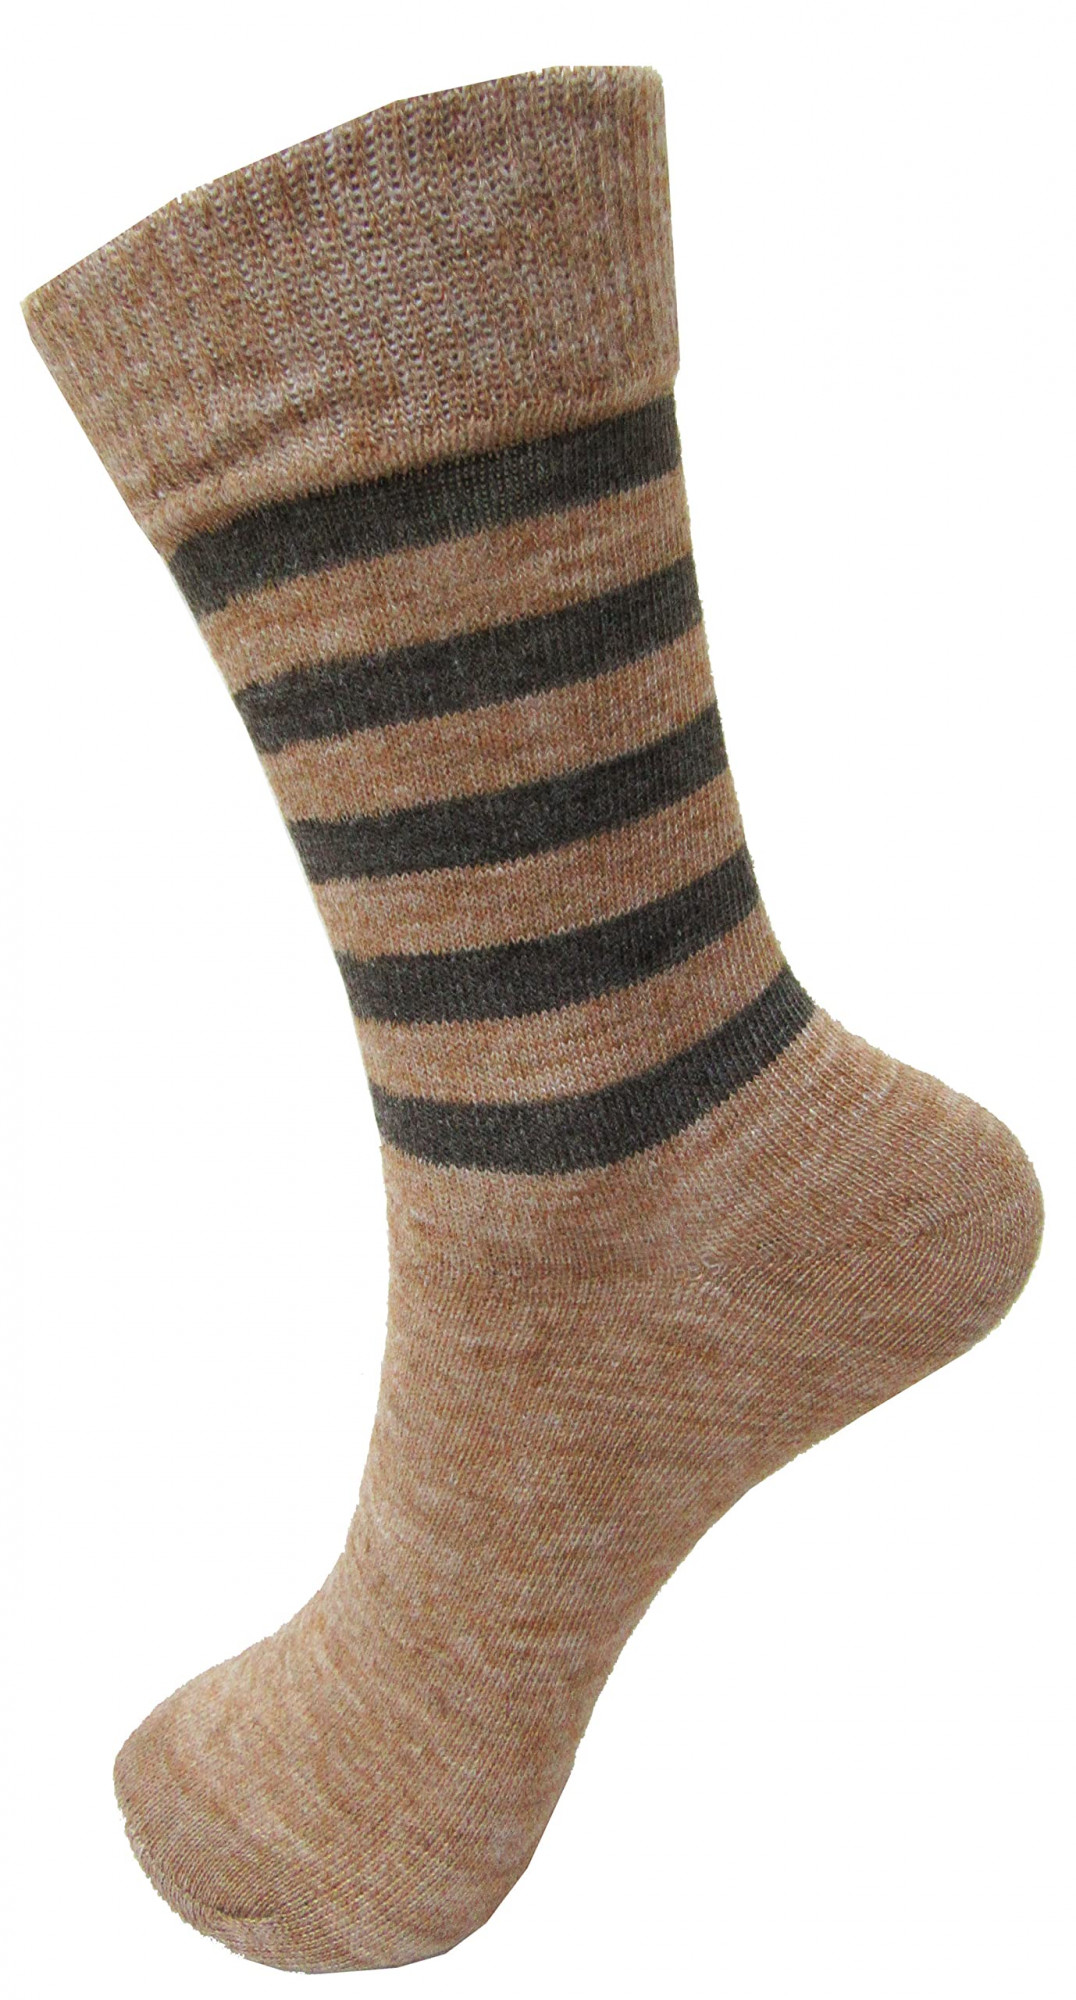 Buy Blue Socks for Men by RC. ROYAL CLASS Online